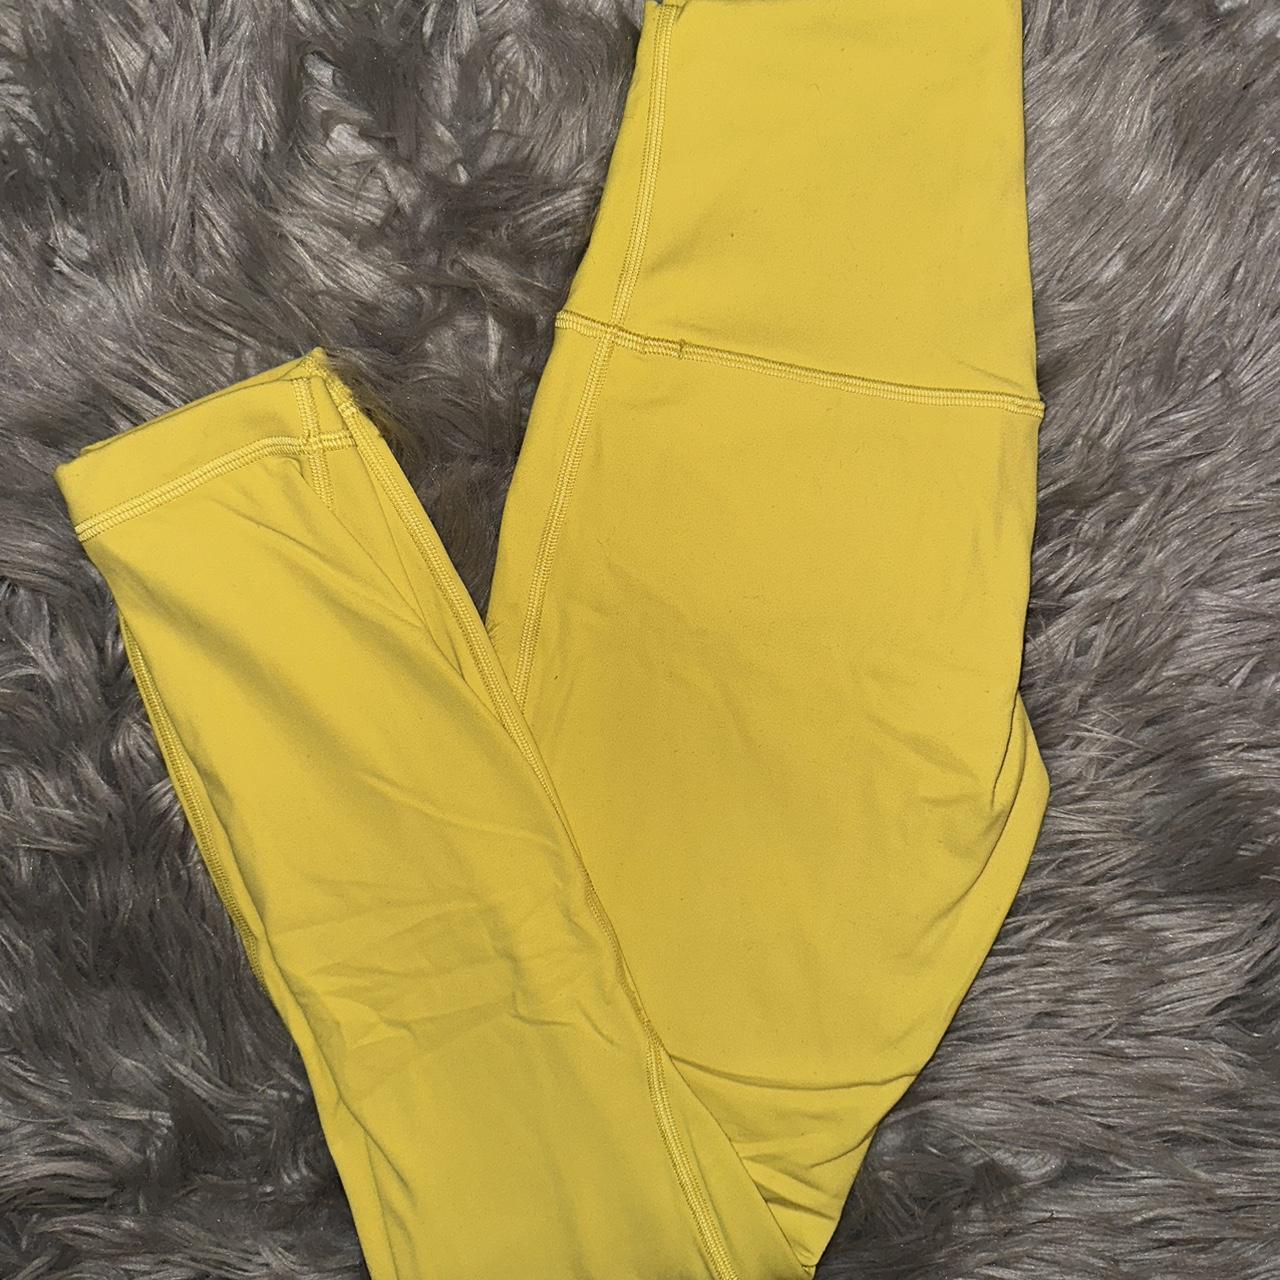 lululemon align leggings 25” color: yellow - Depop